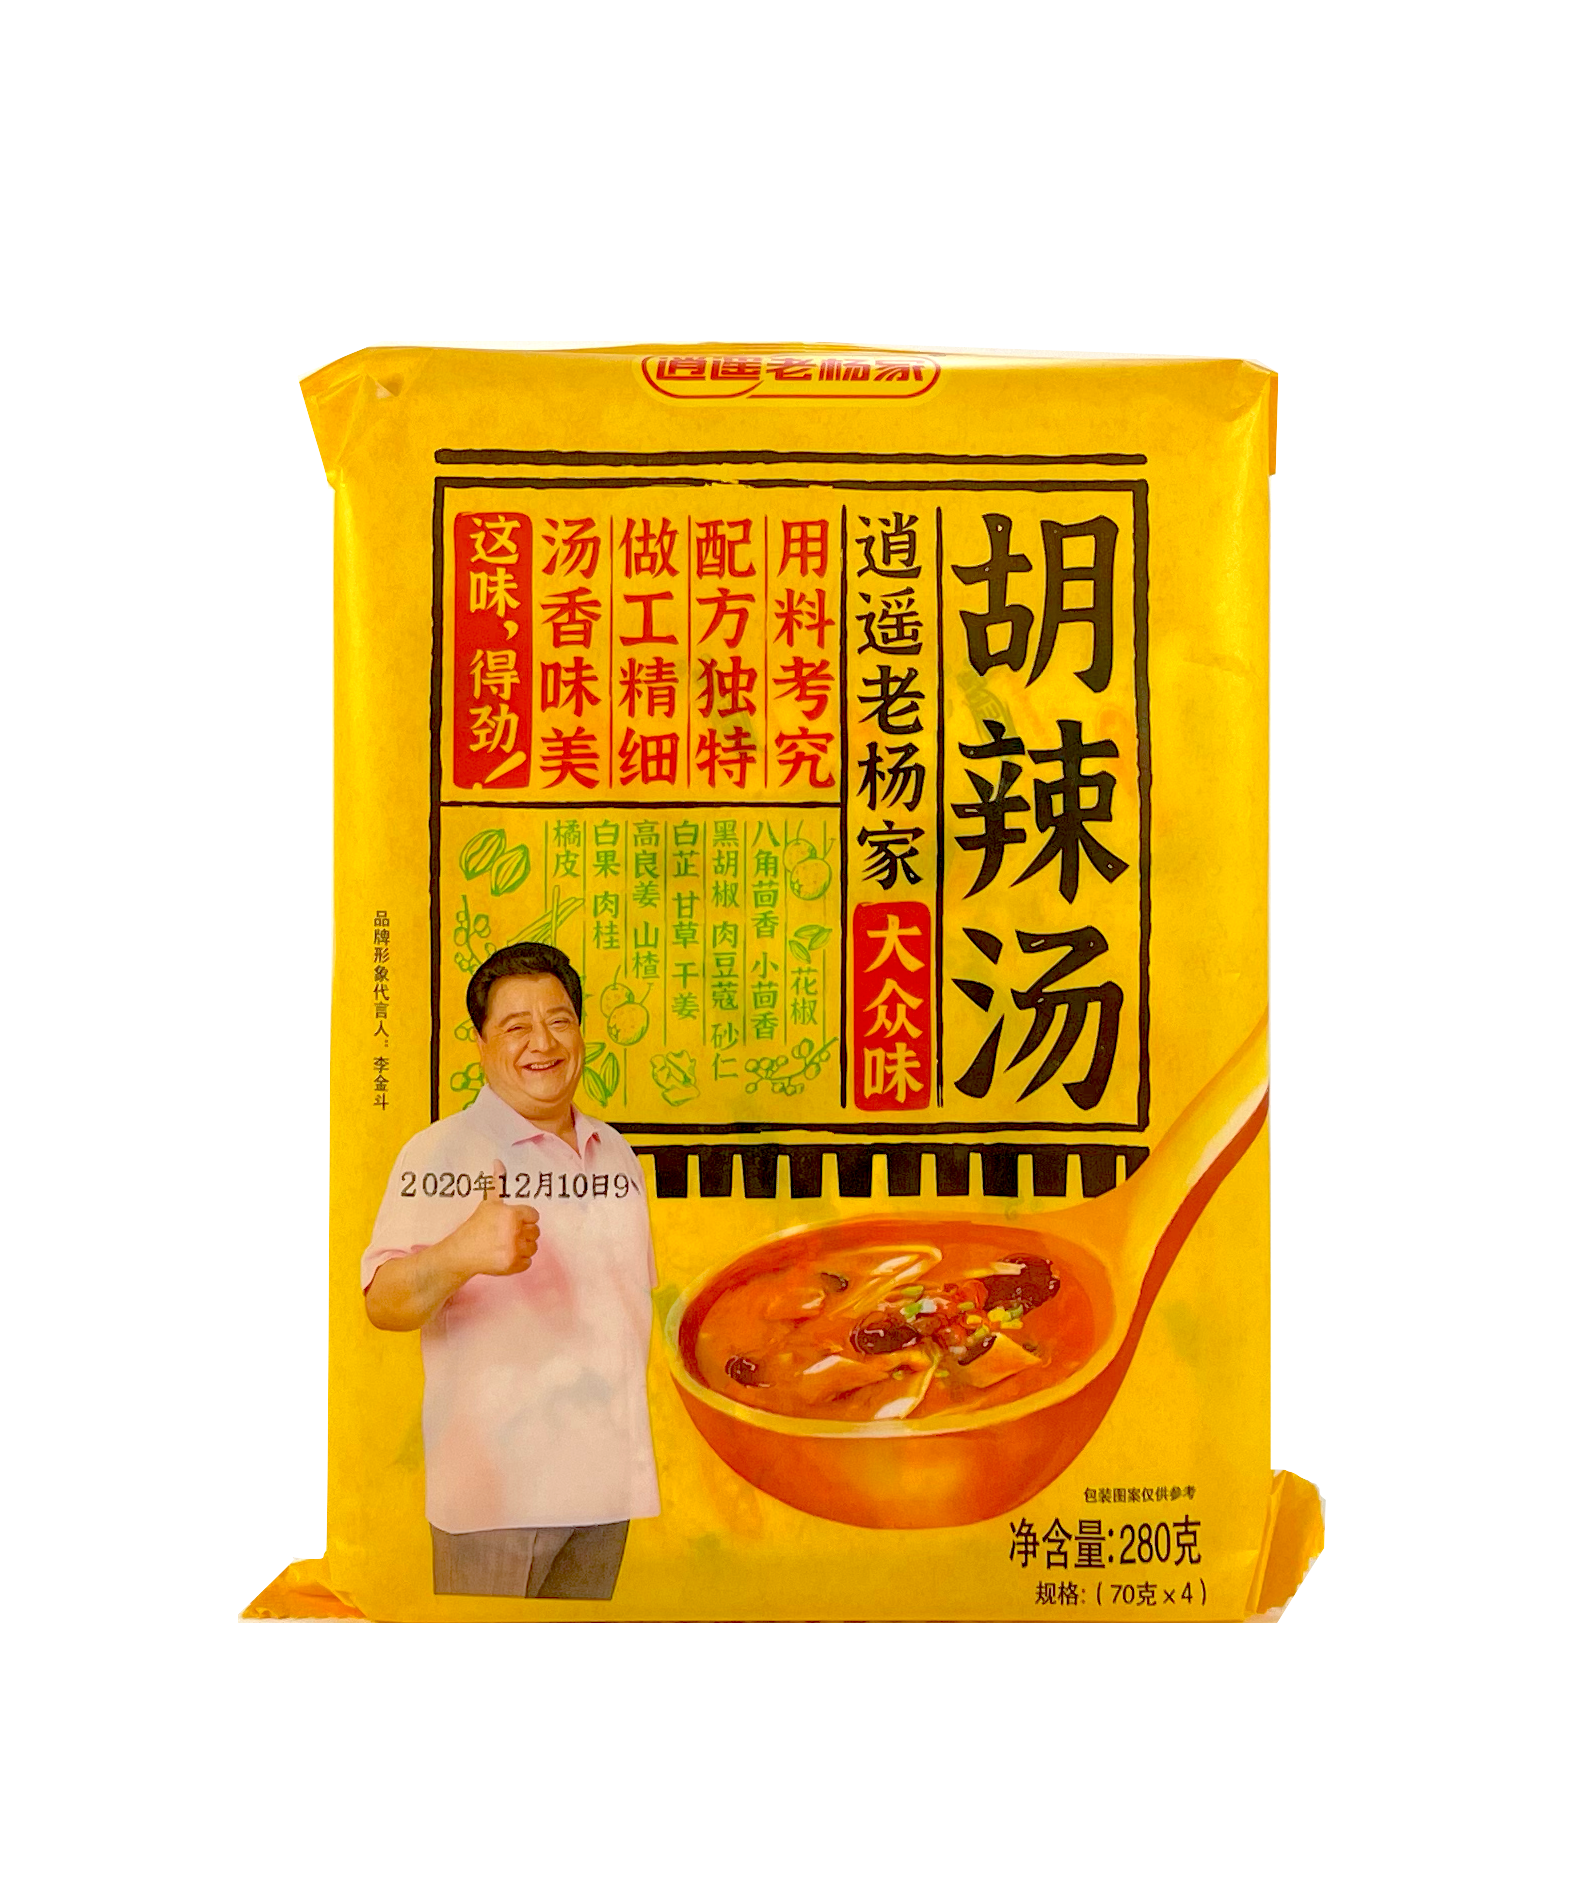 Snabbsoppa Spicy Peppar Smak 280g Hu La Tang Lao Yang Jia Kina